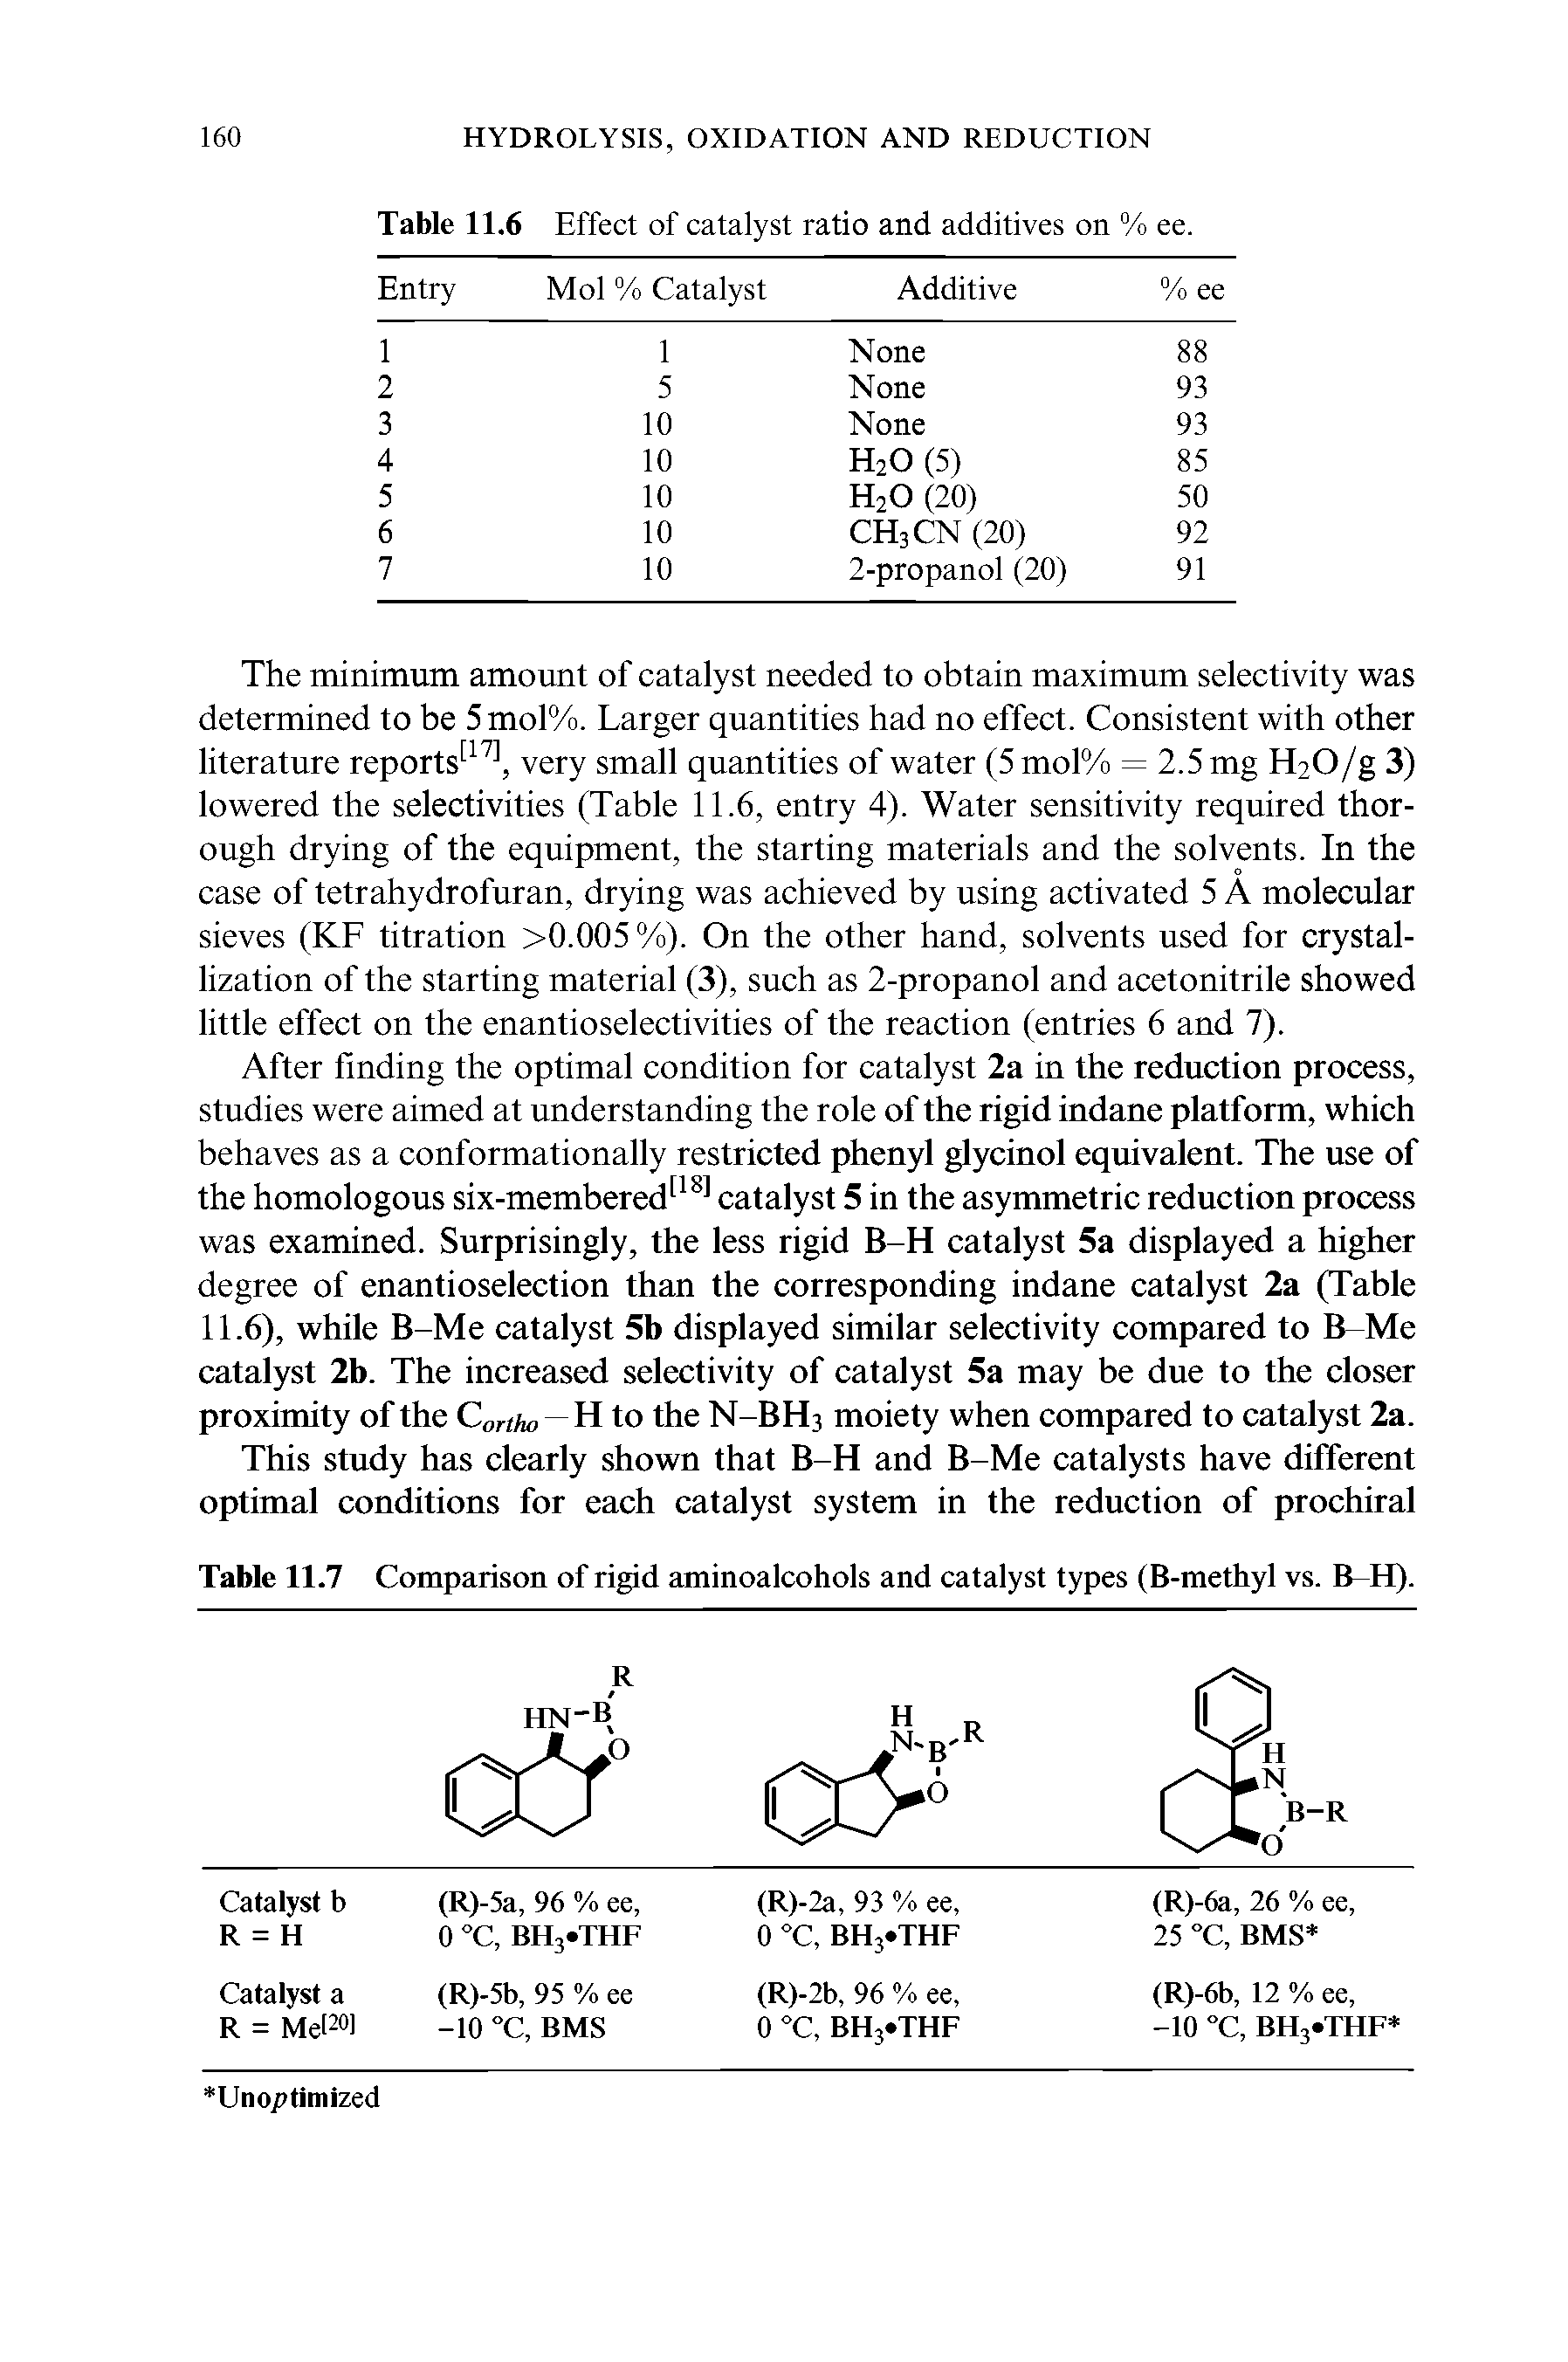 Table 11.7 Comparison of rigid aminoalcohols and catalyst types (B-methyl vs. B-H).